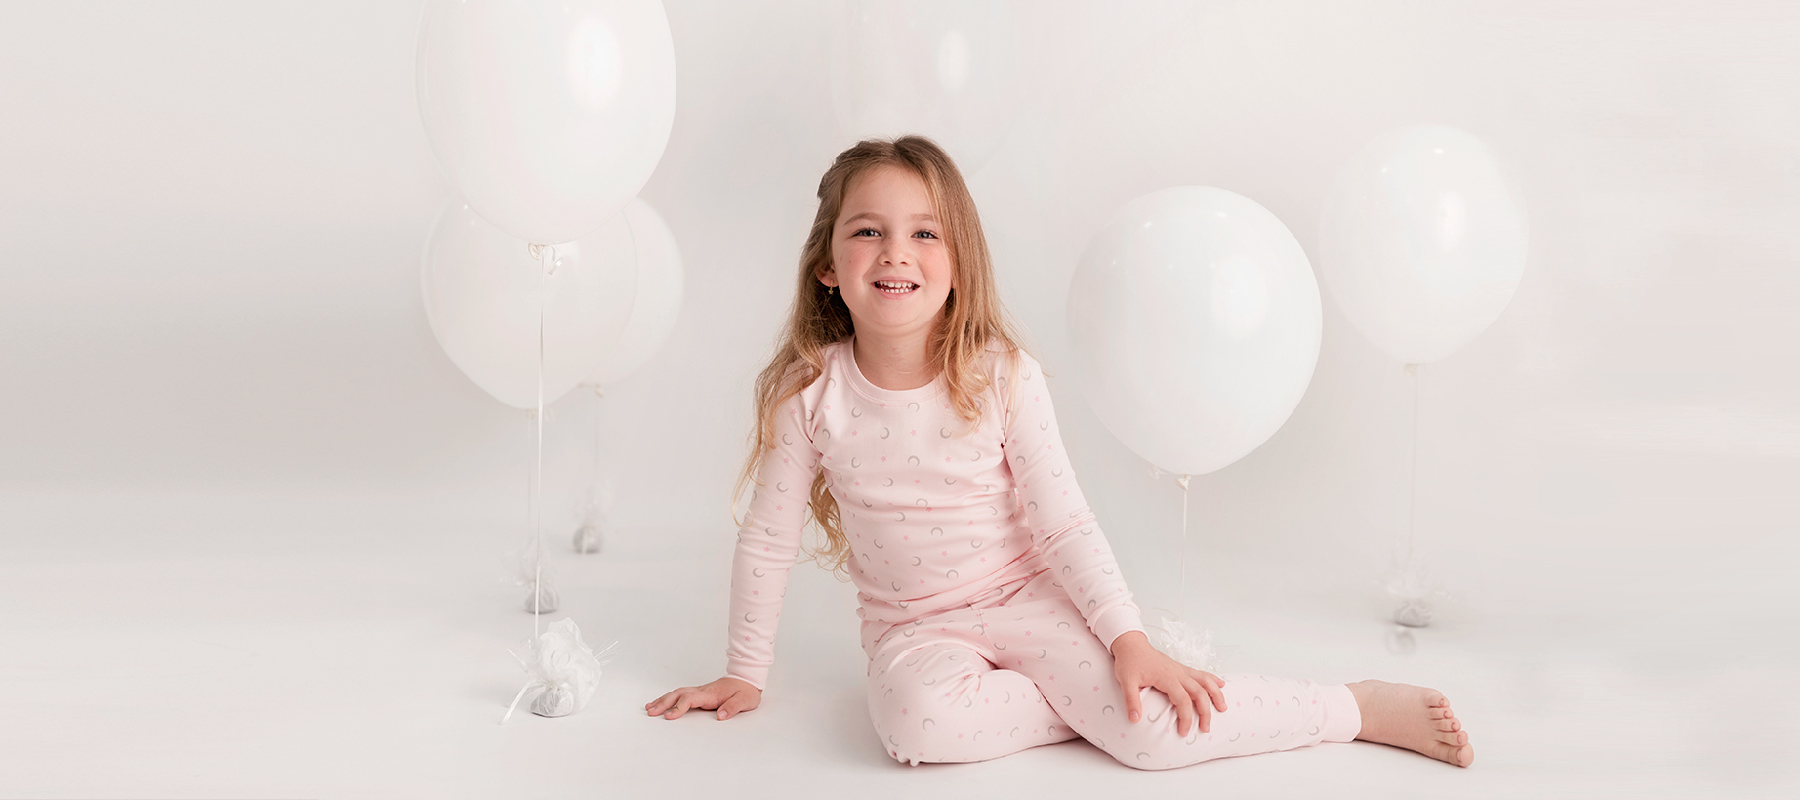 Little girl wearing Pima cotton pajamas, sitting on the floor with balloons